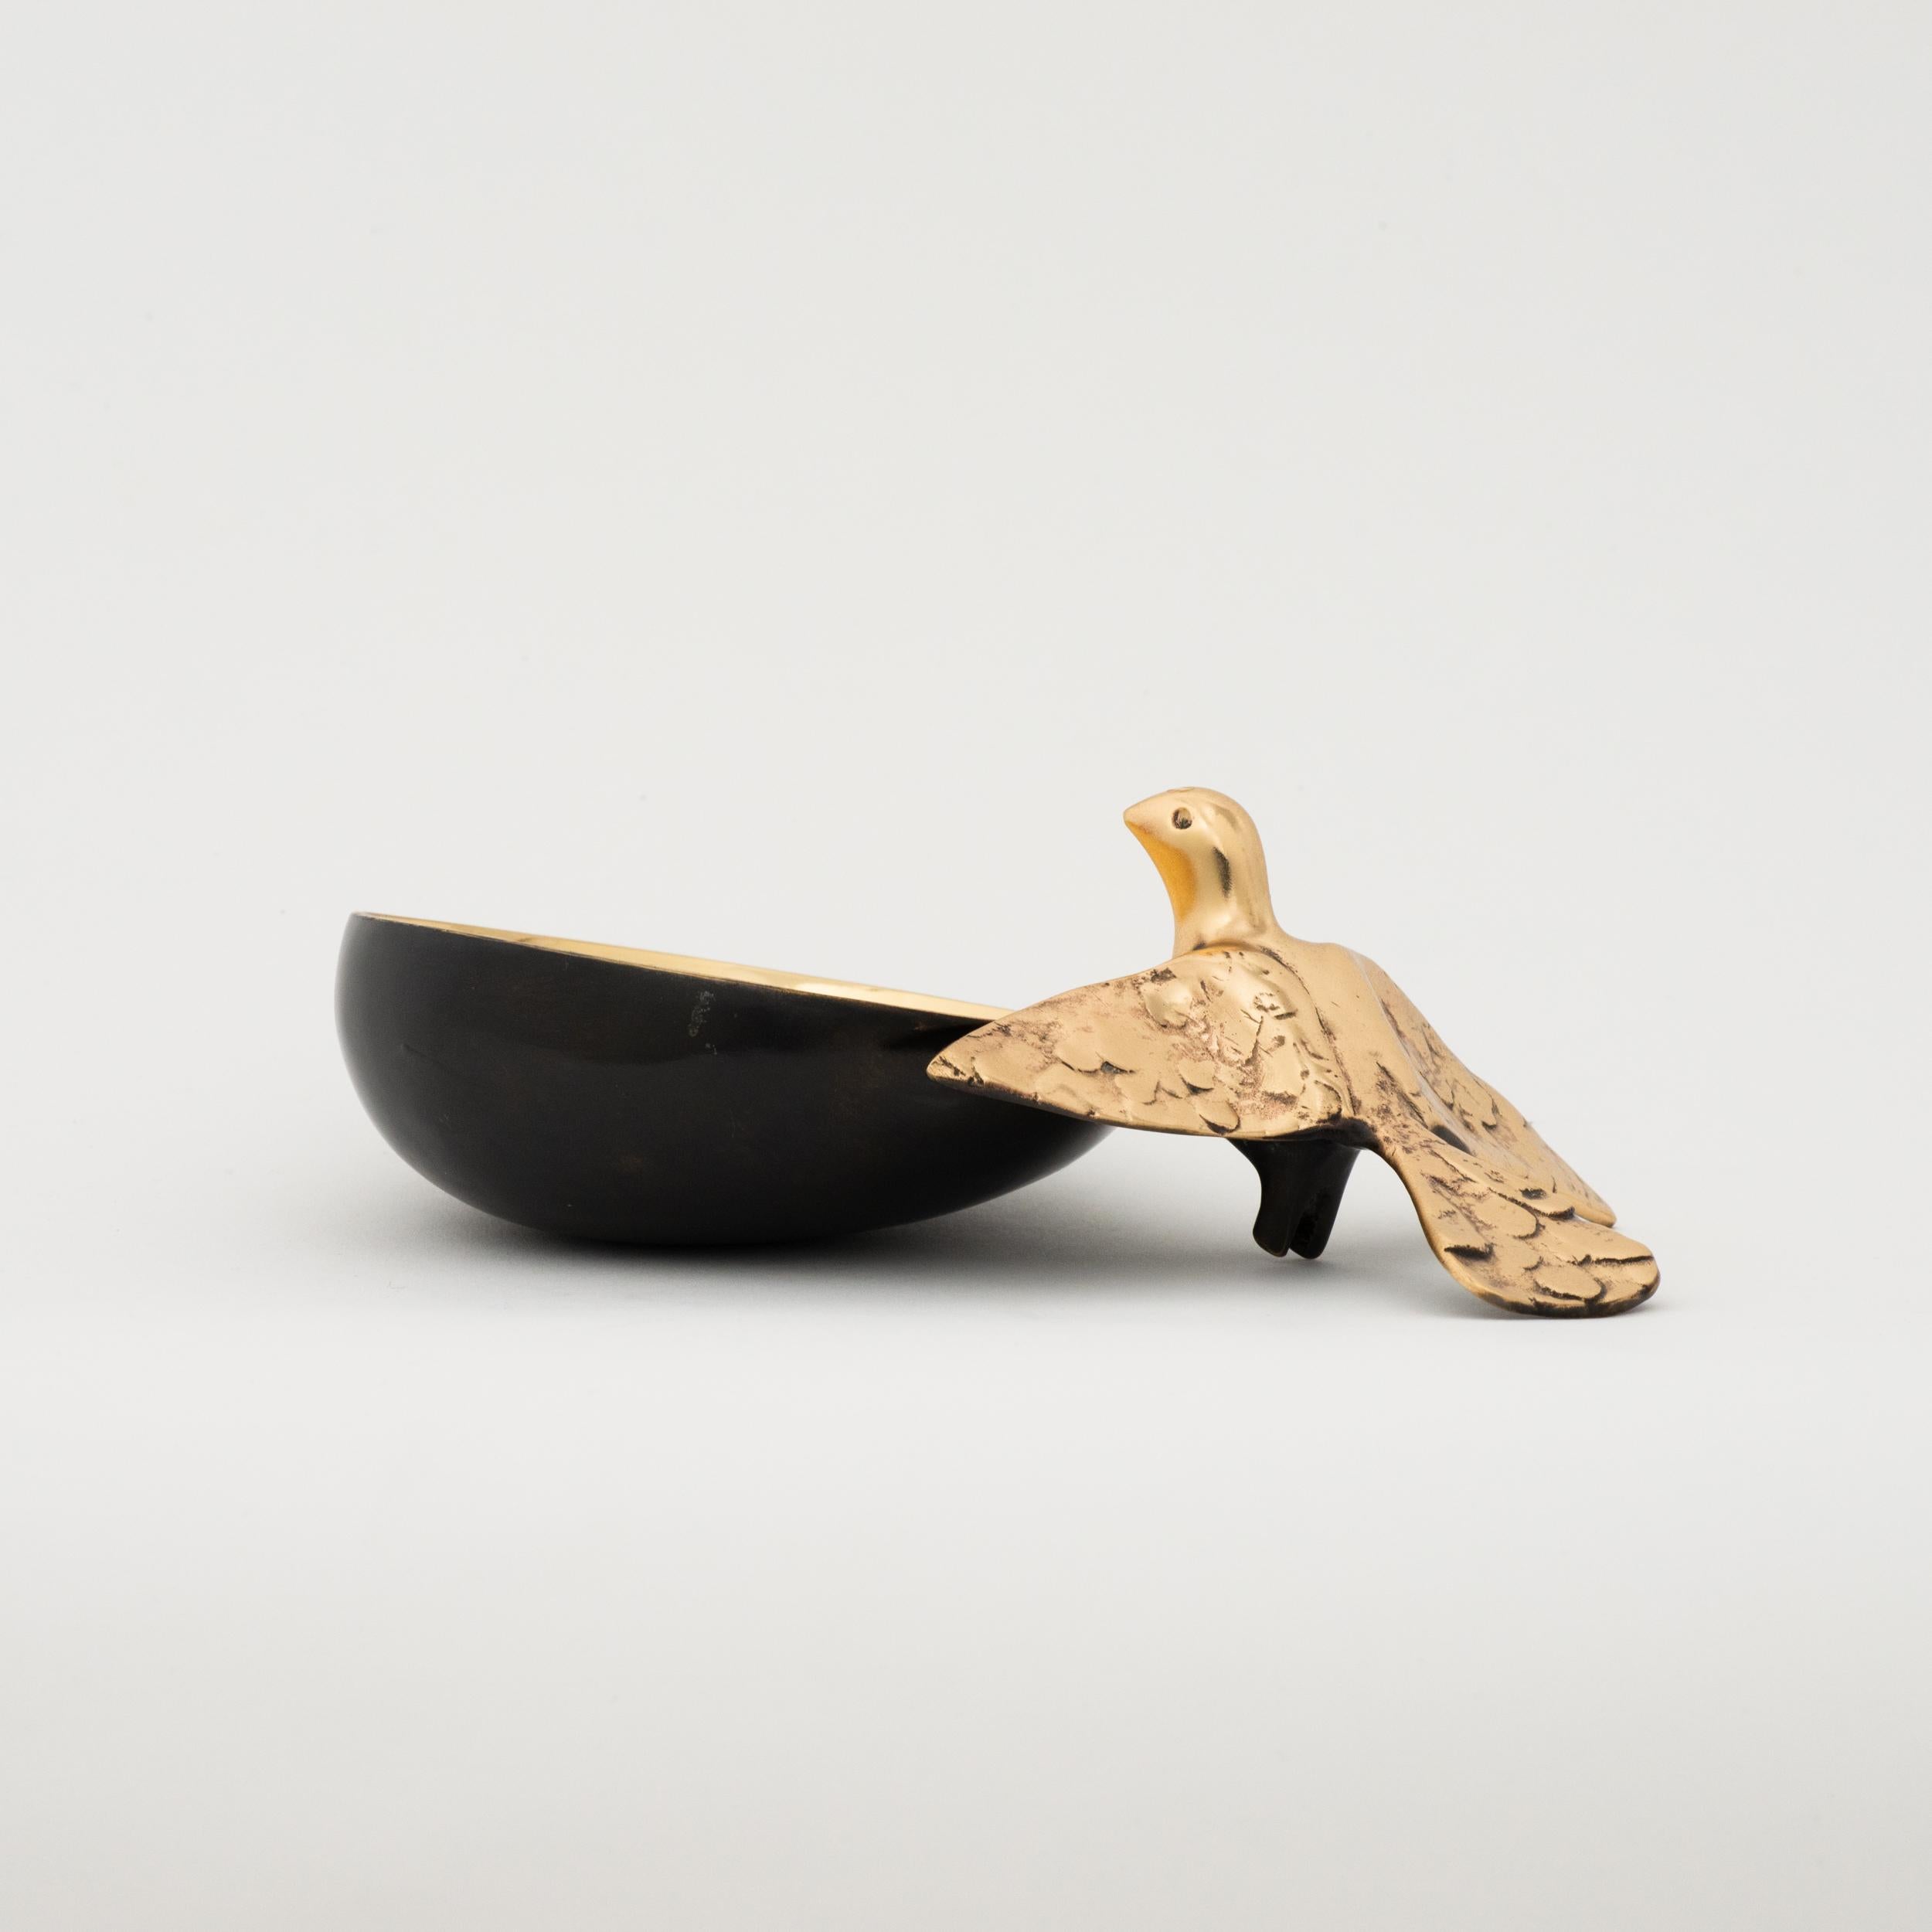 Handmade Cast Bronze Decorative Bowl with Bird 1